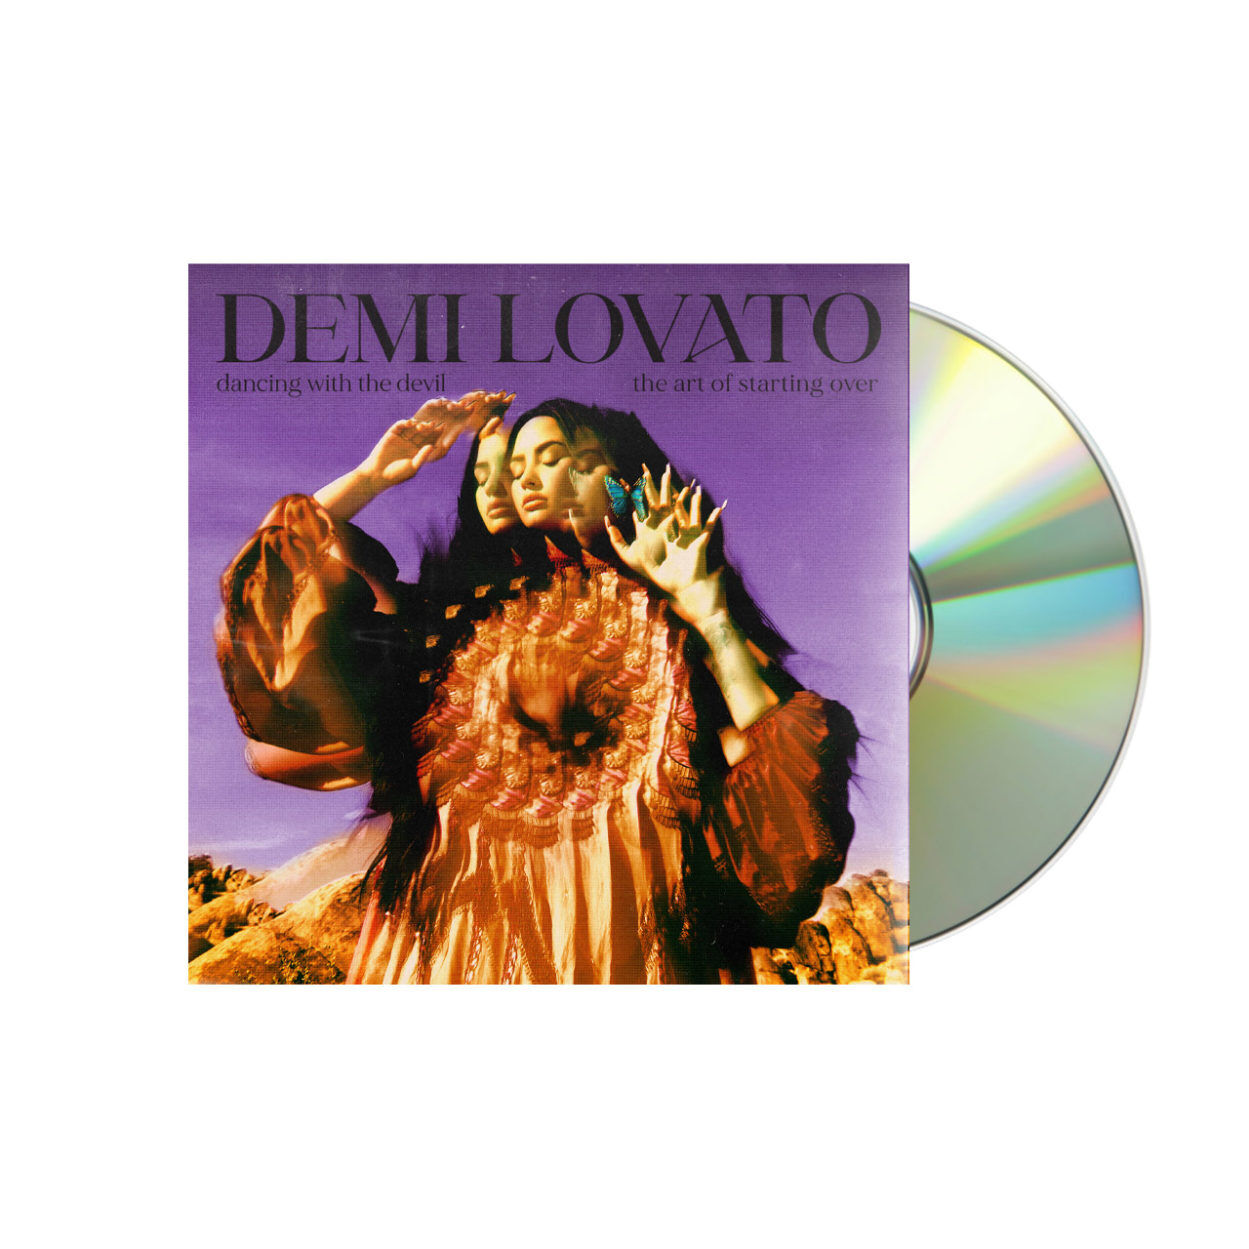 DEMI LOVATO demi lovato the art of starting over cover 1 CD